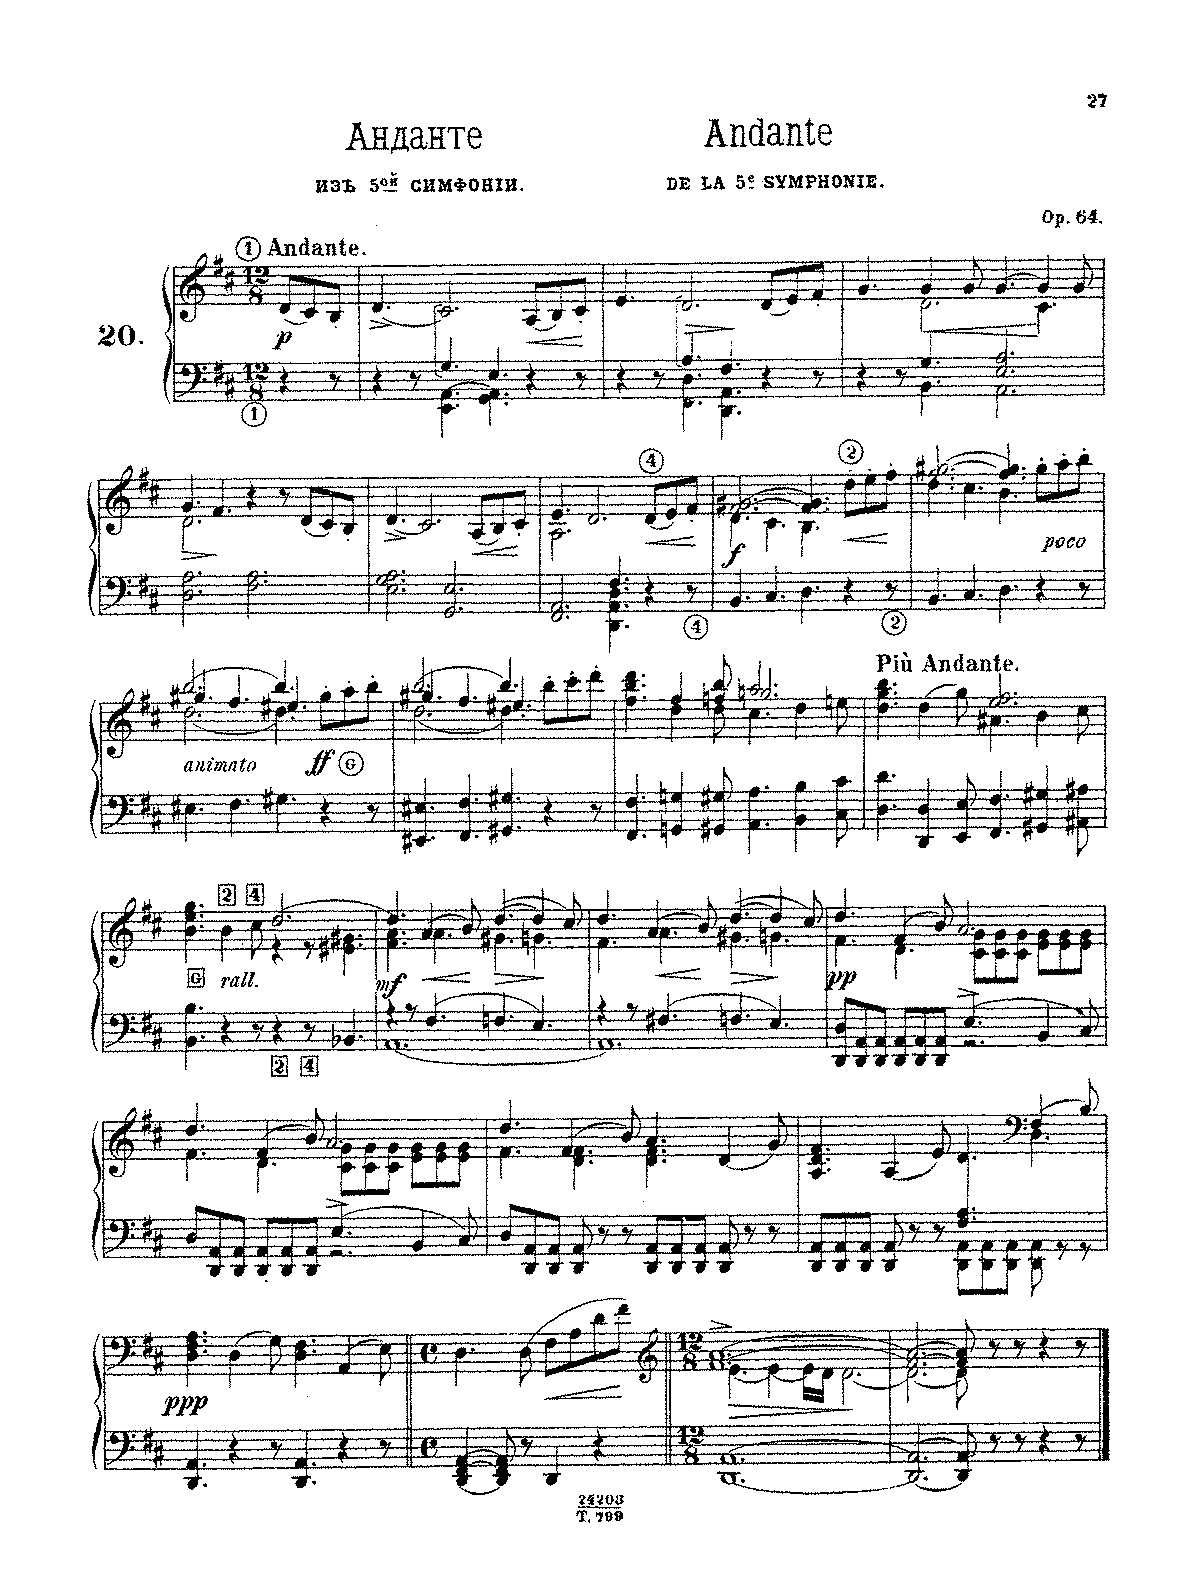 tchaikovsky symphony 5 imslp - tchaikovsky symphony 5 movement 2